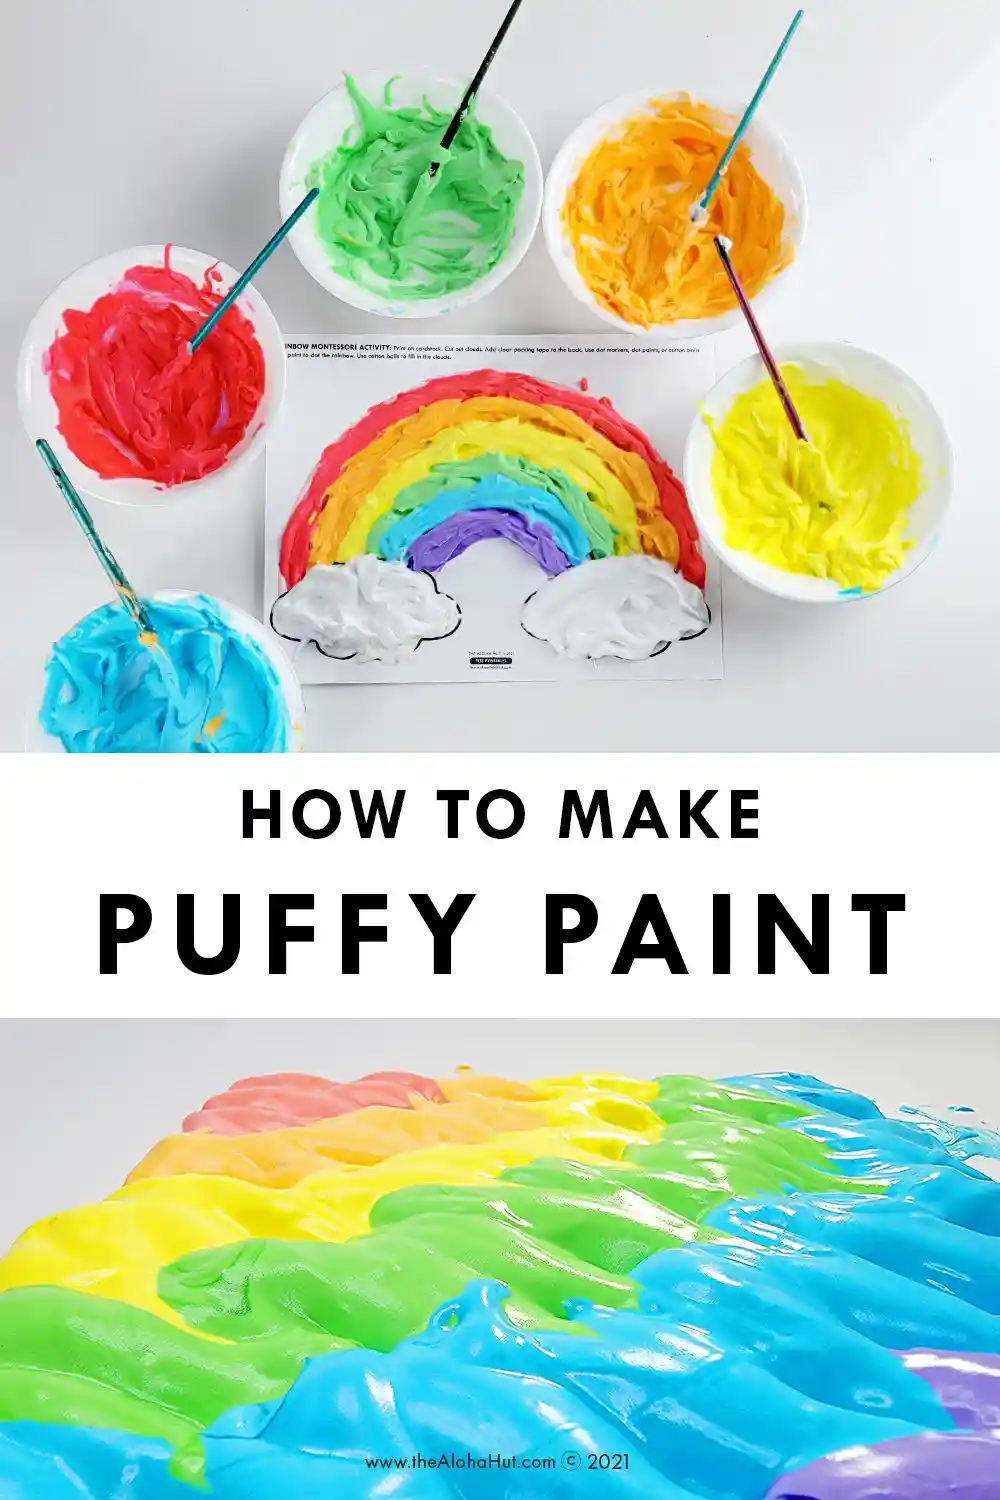 How to Make Puffy Paint - The Aloha Hut